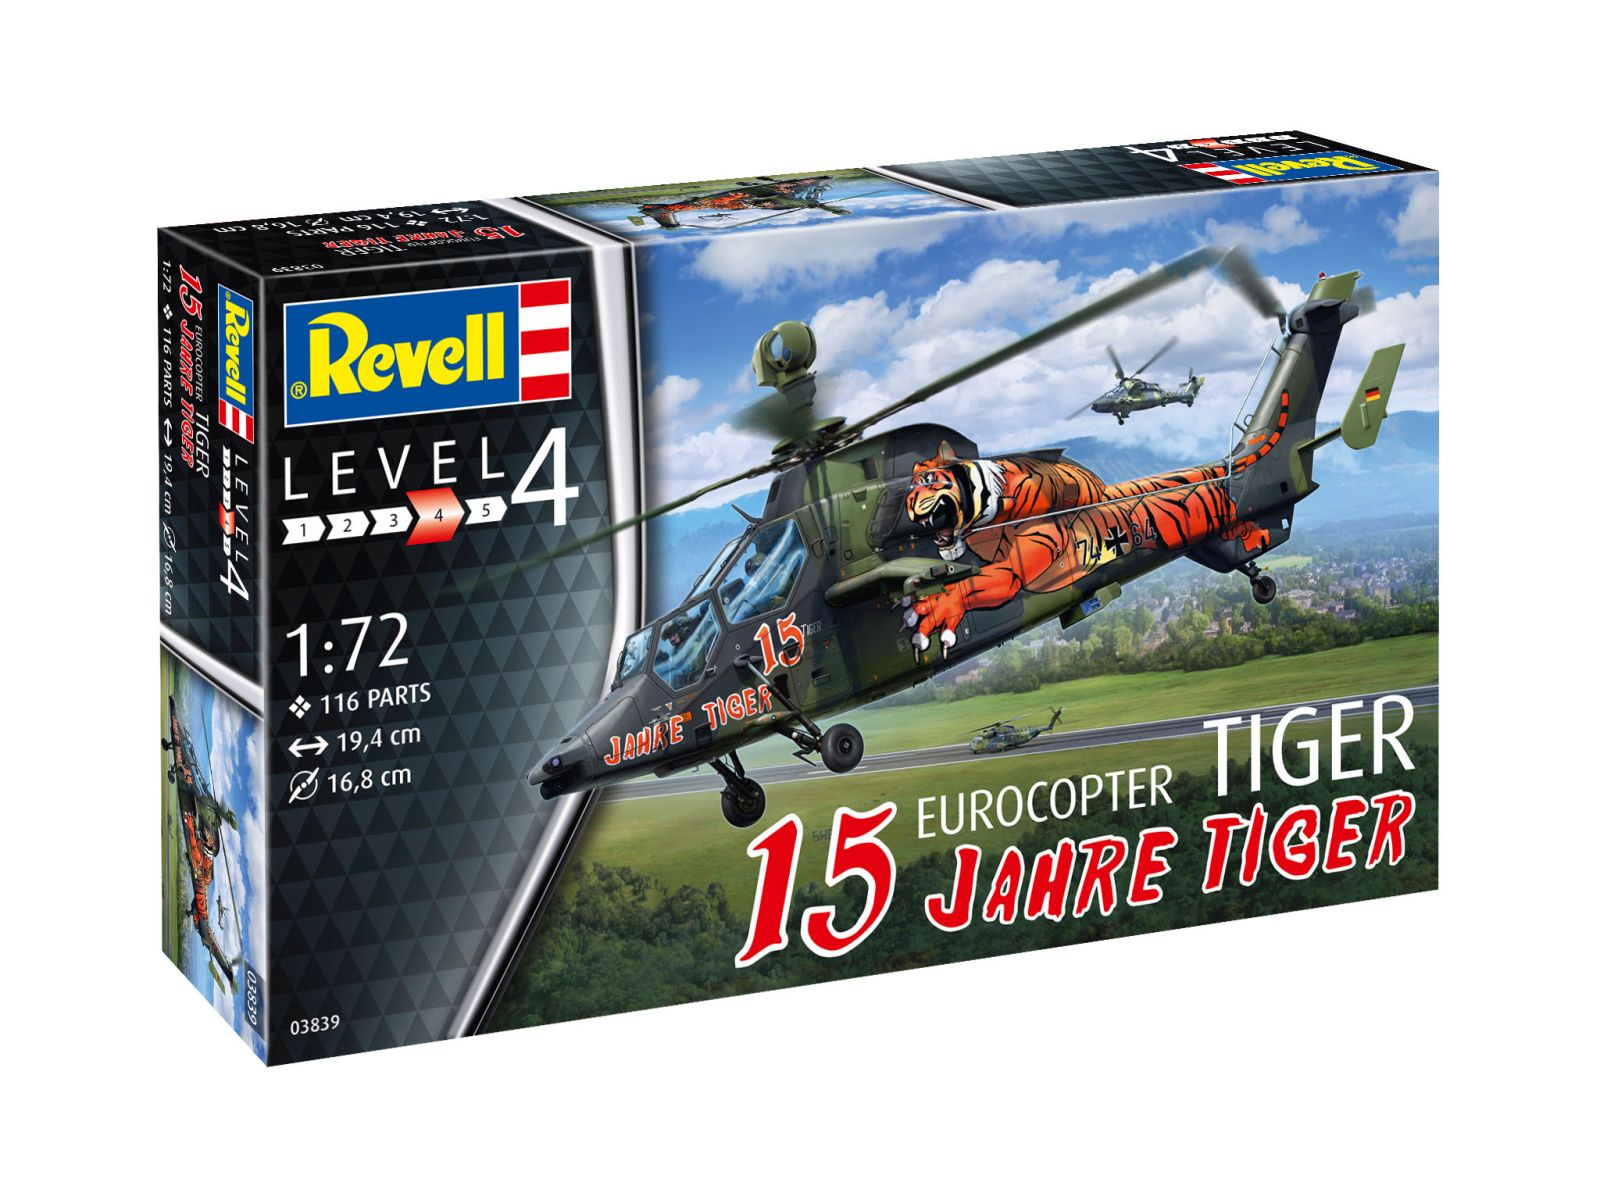 Revell 03839 - Eurocopter Tiger "15 Jahre Tiger"